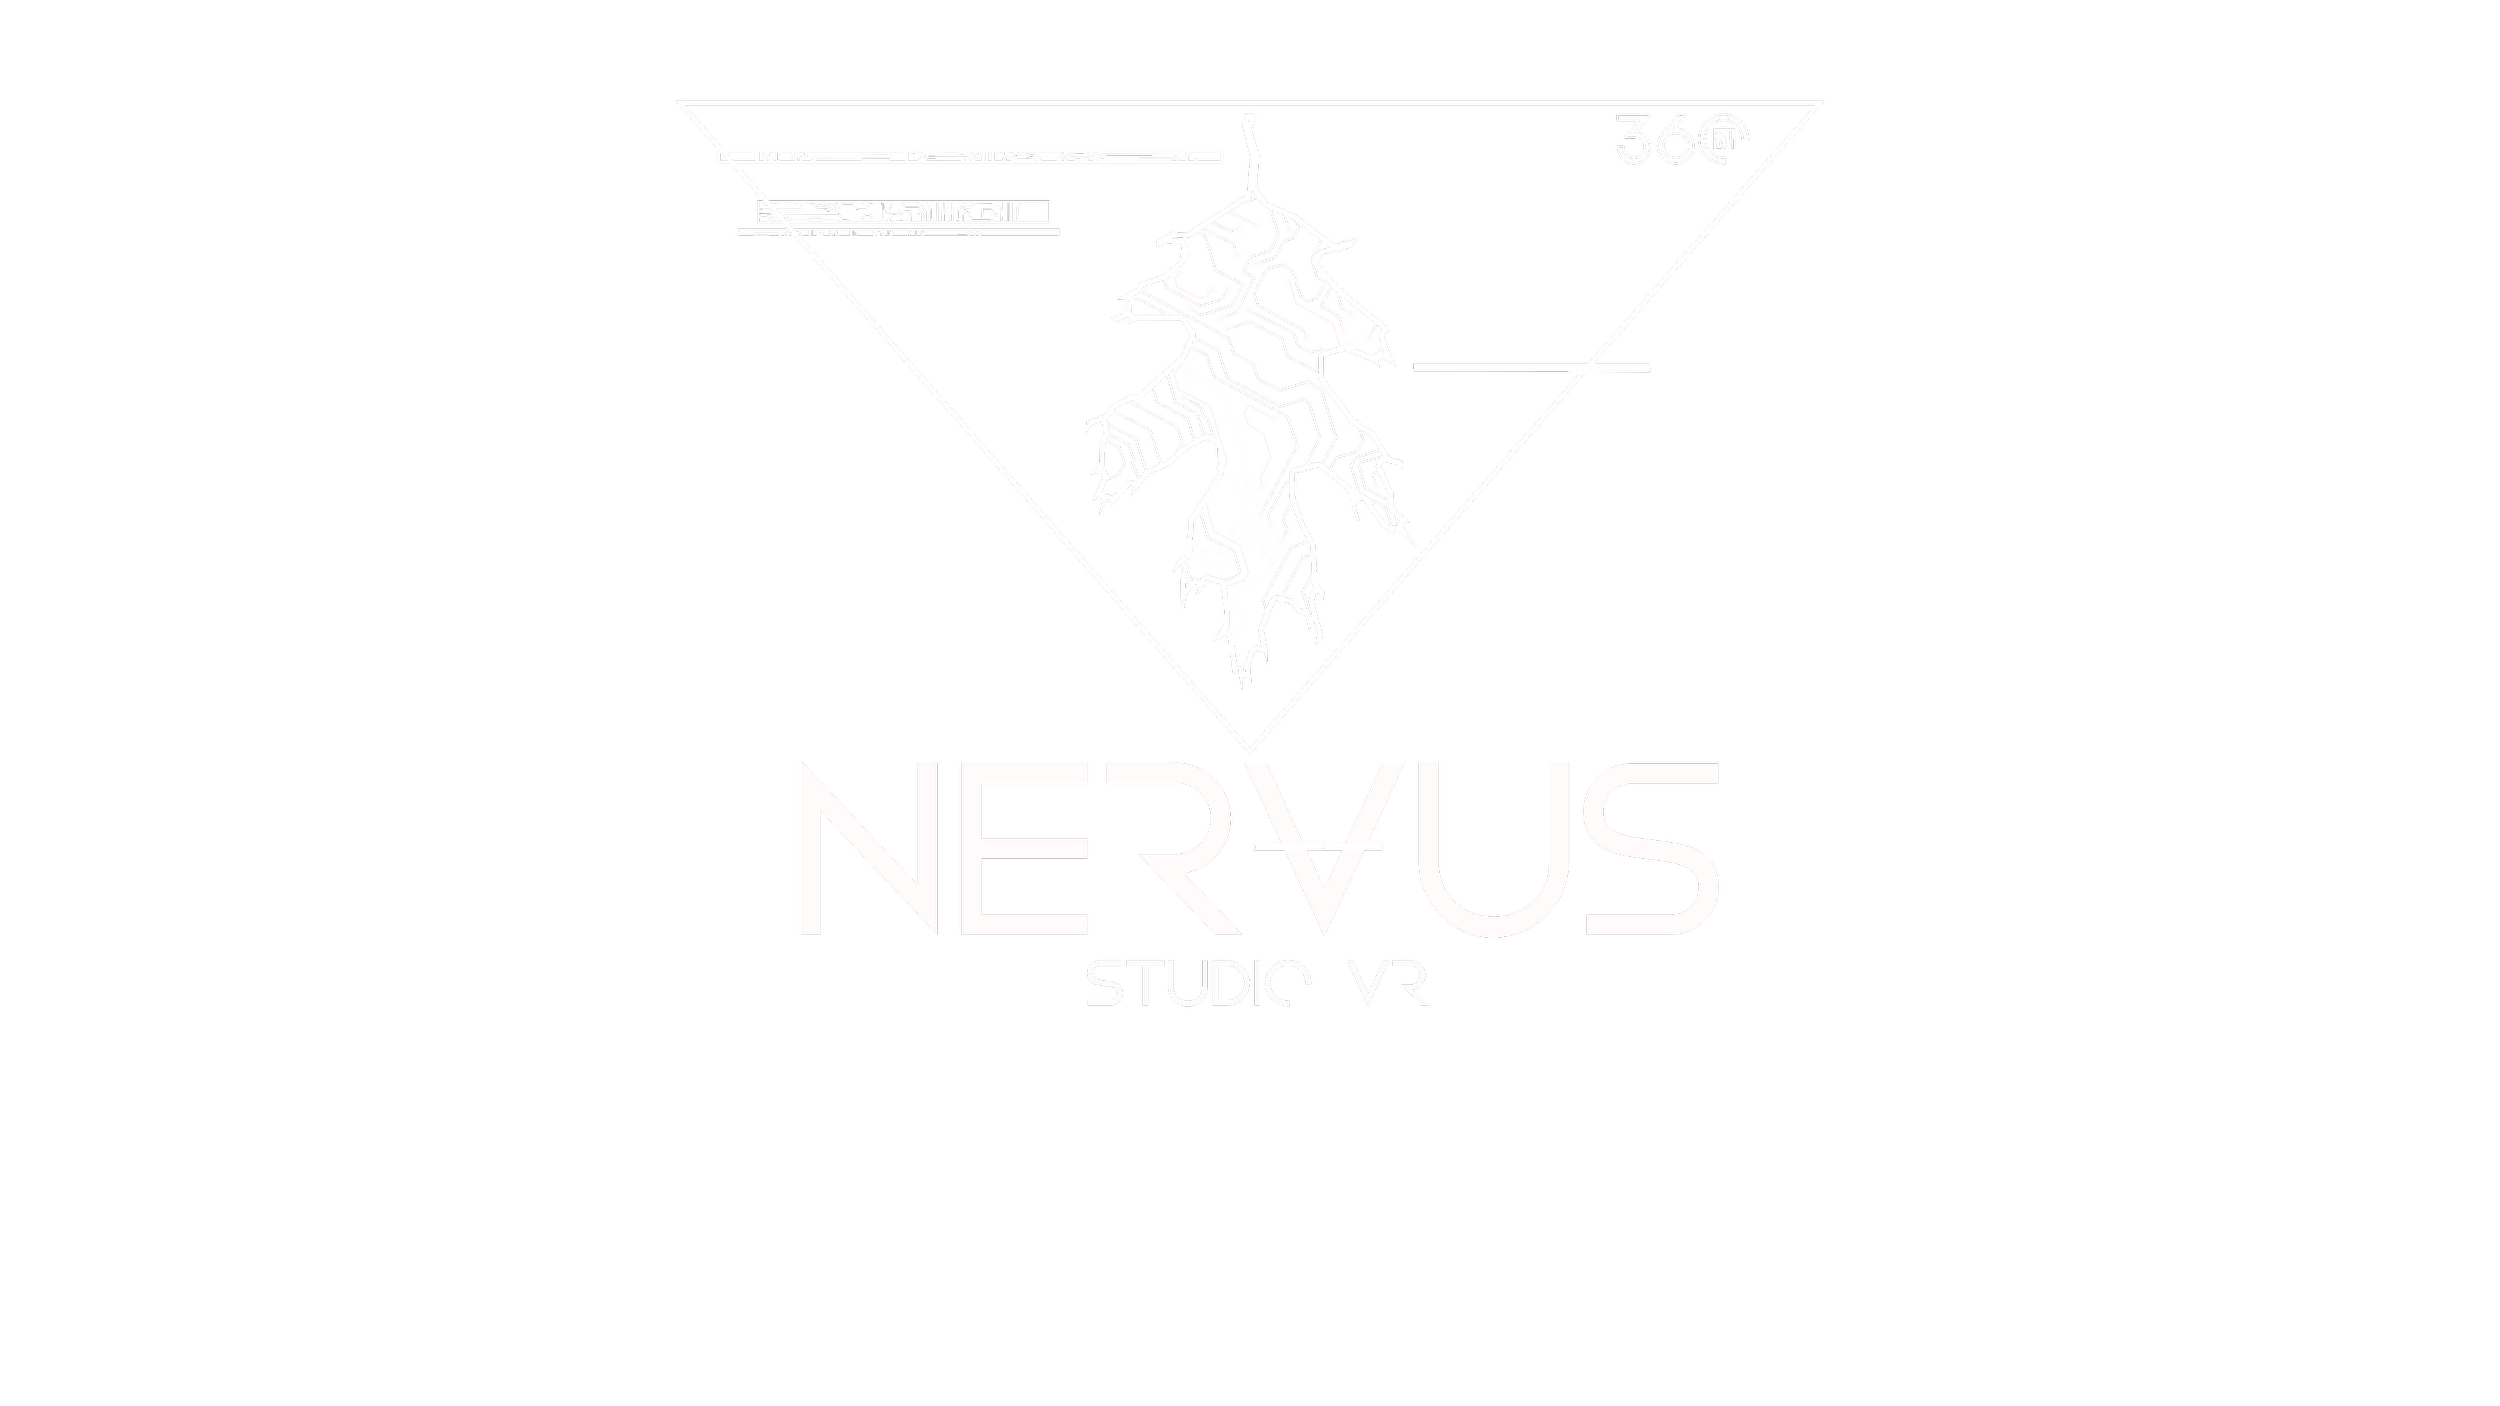 Nervus Studio VR logo